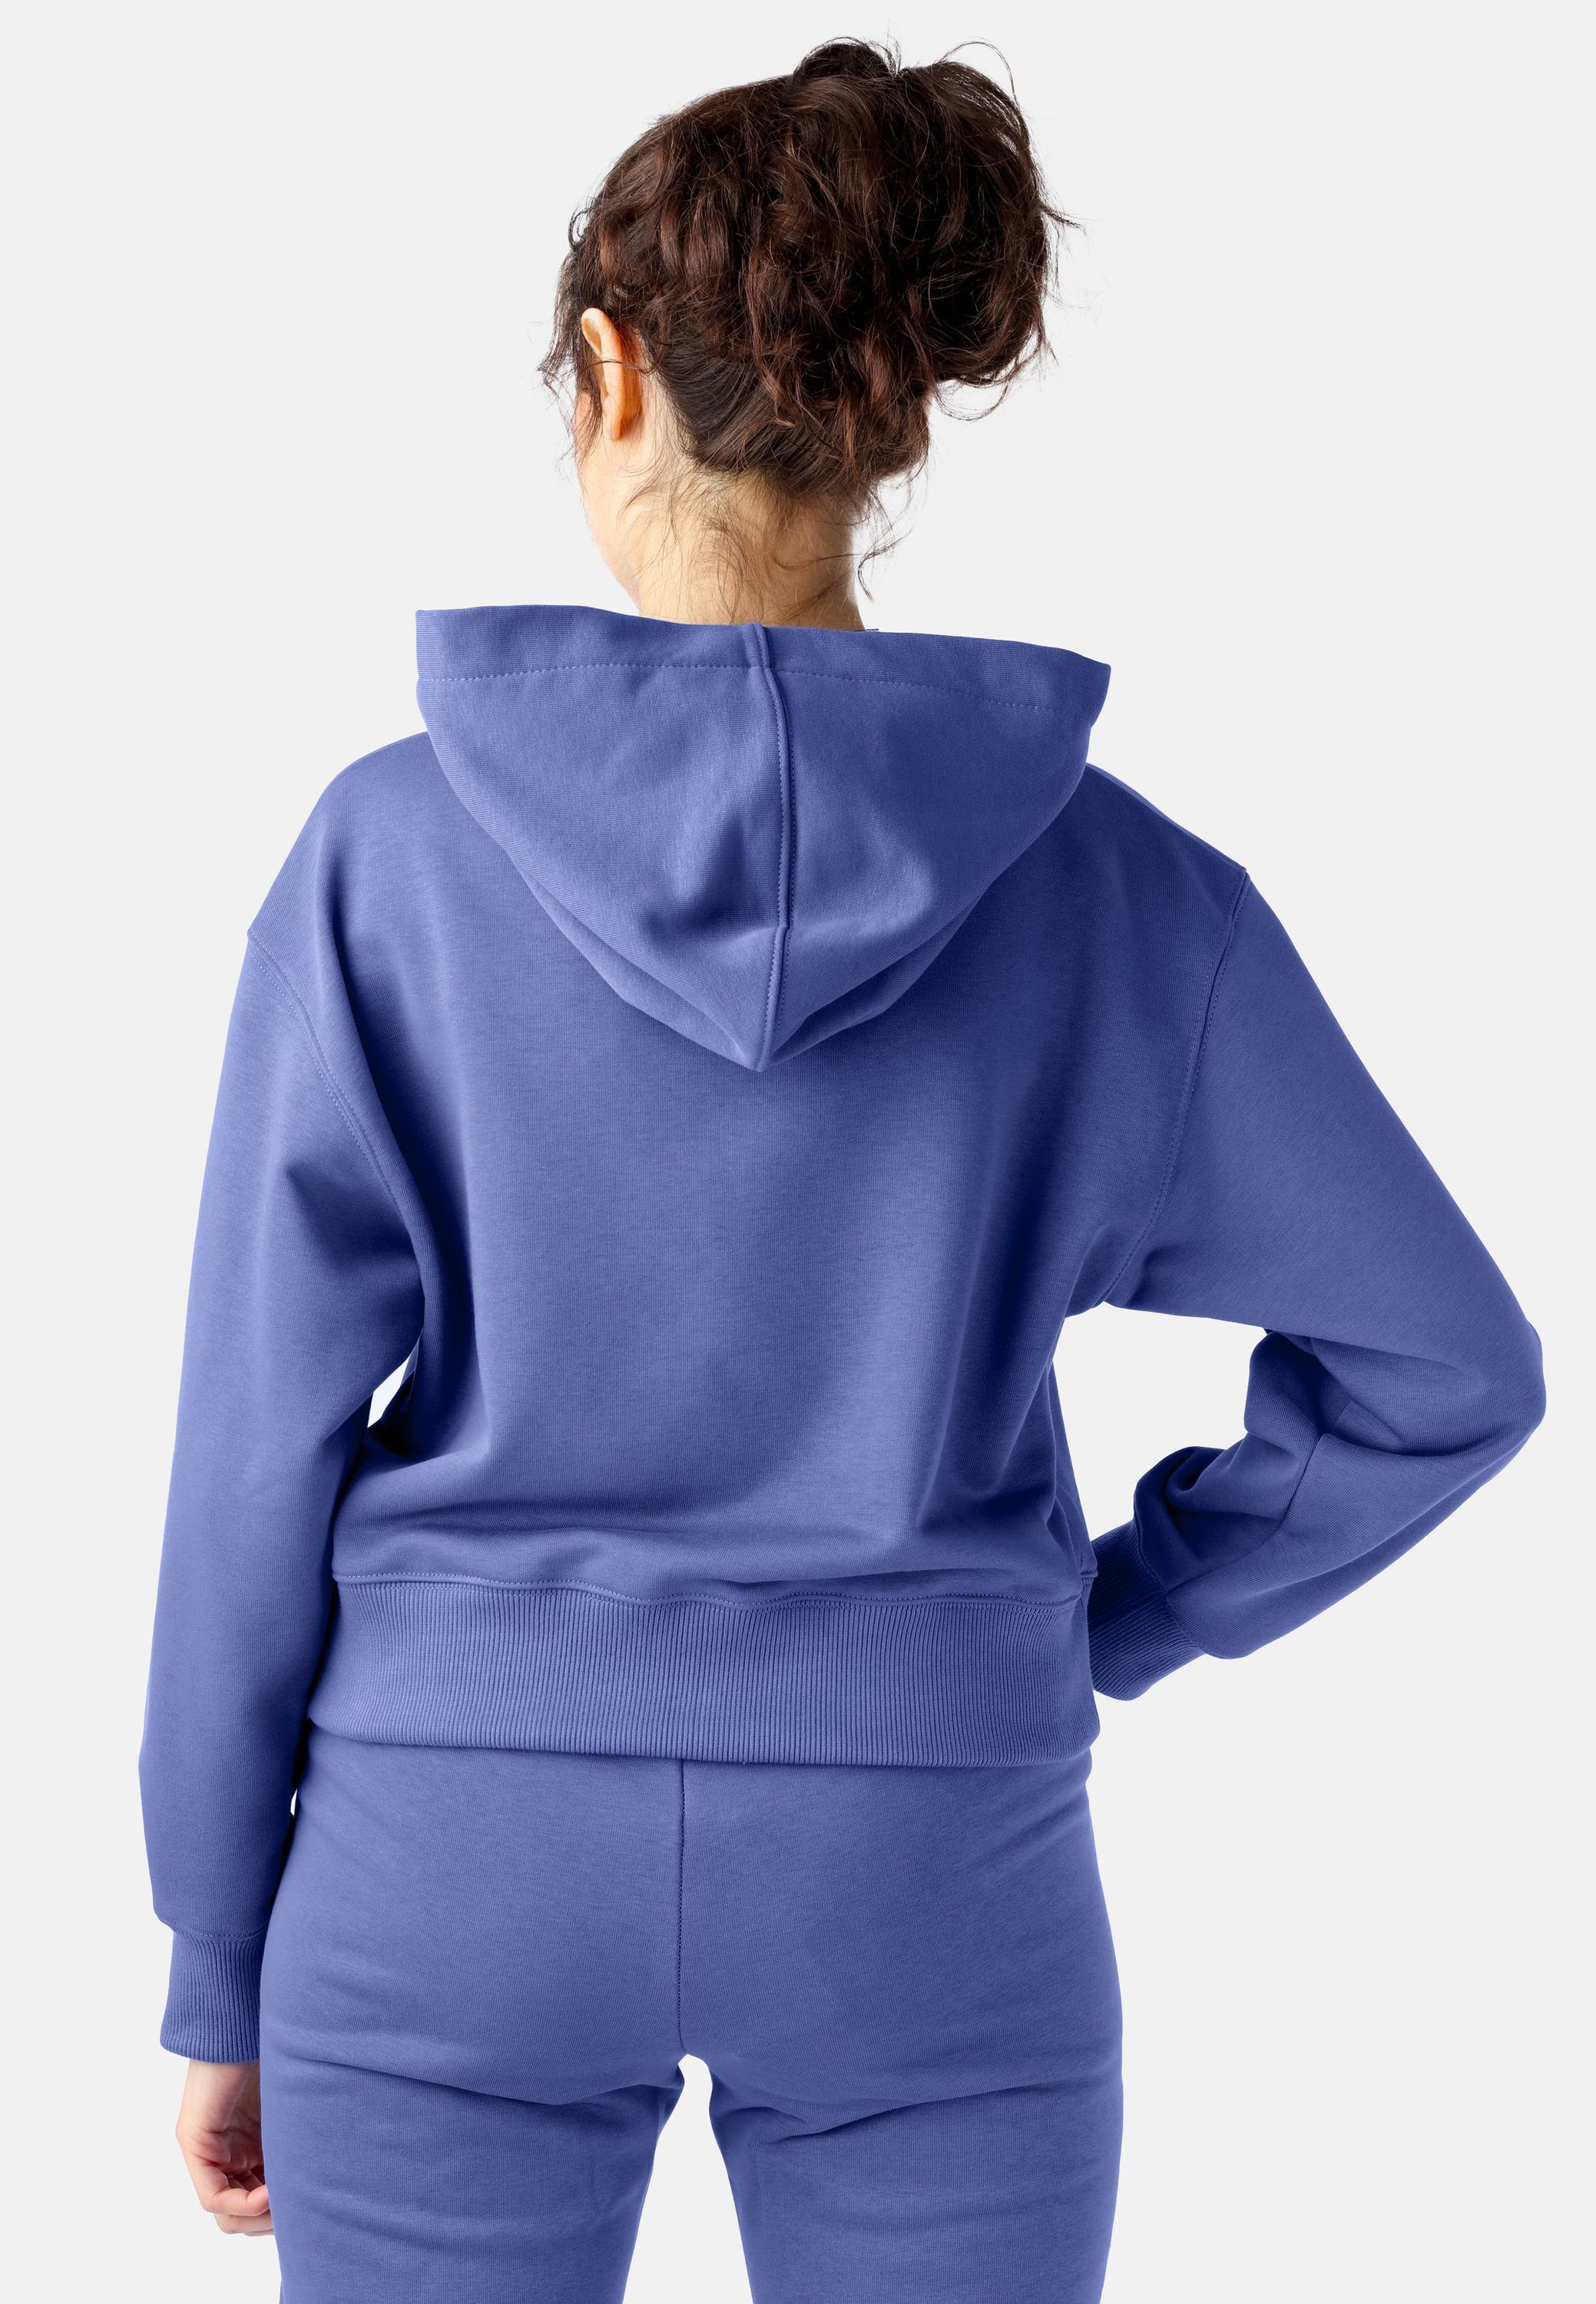 Bellivalini Kapuzensweatshirt Kapuzenpullover BLV208 Oberteil Pullover Damen Lila-blau Jogging Sportanzug kurz